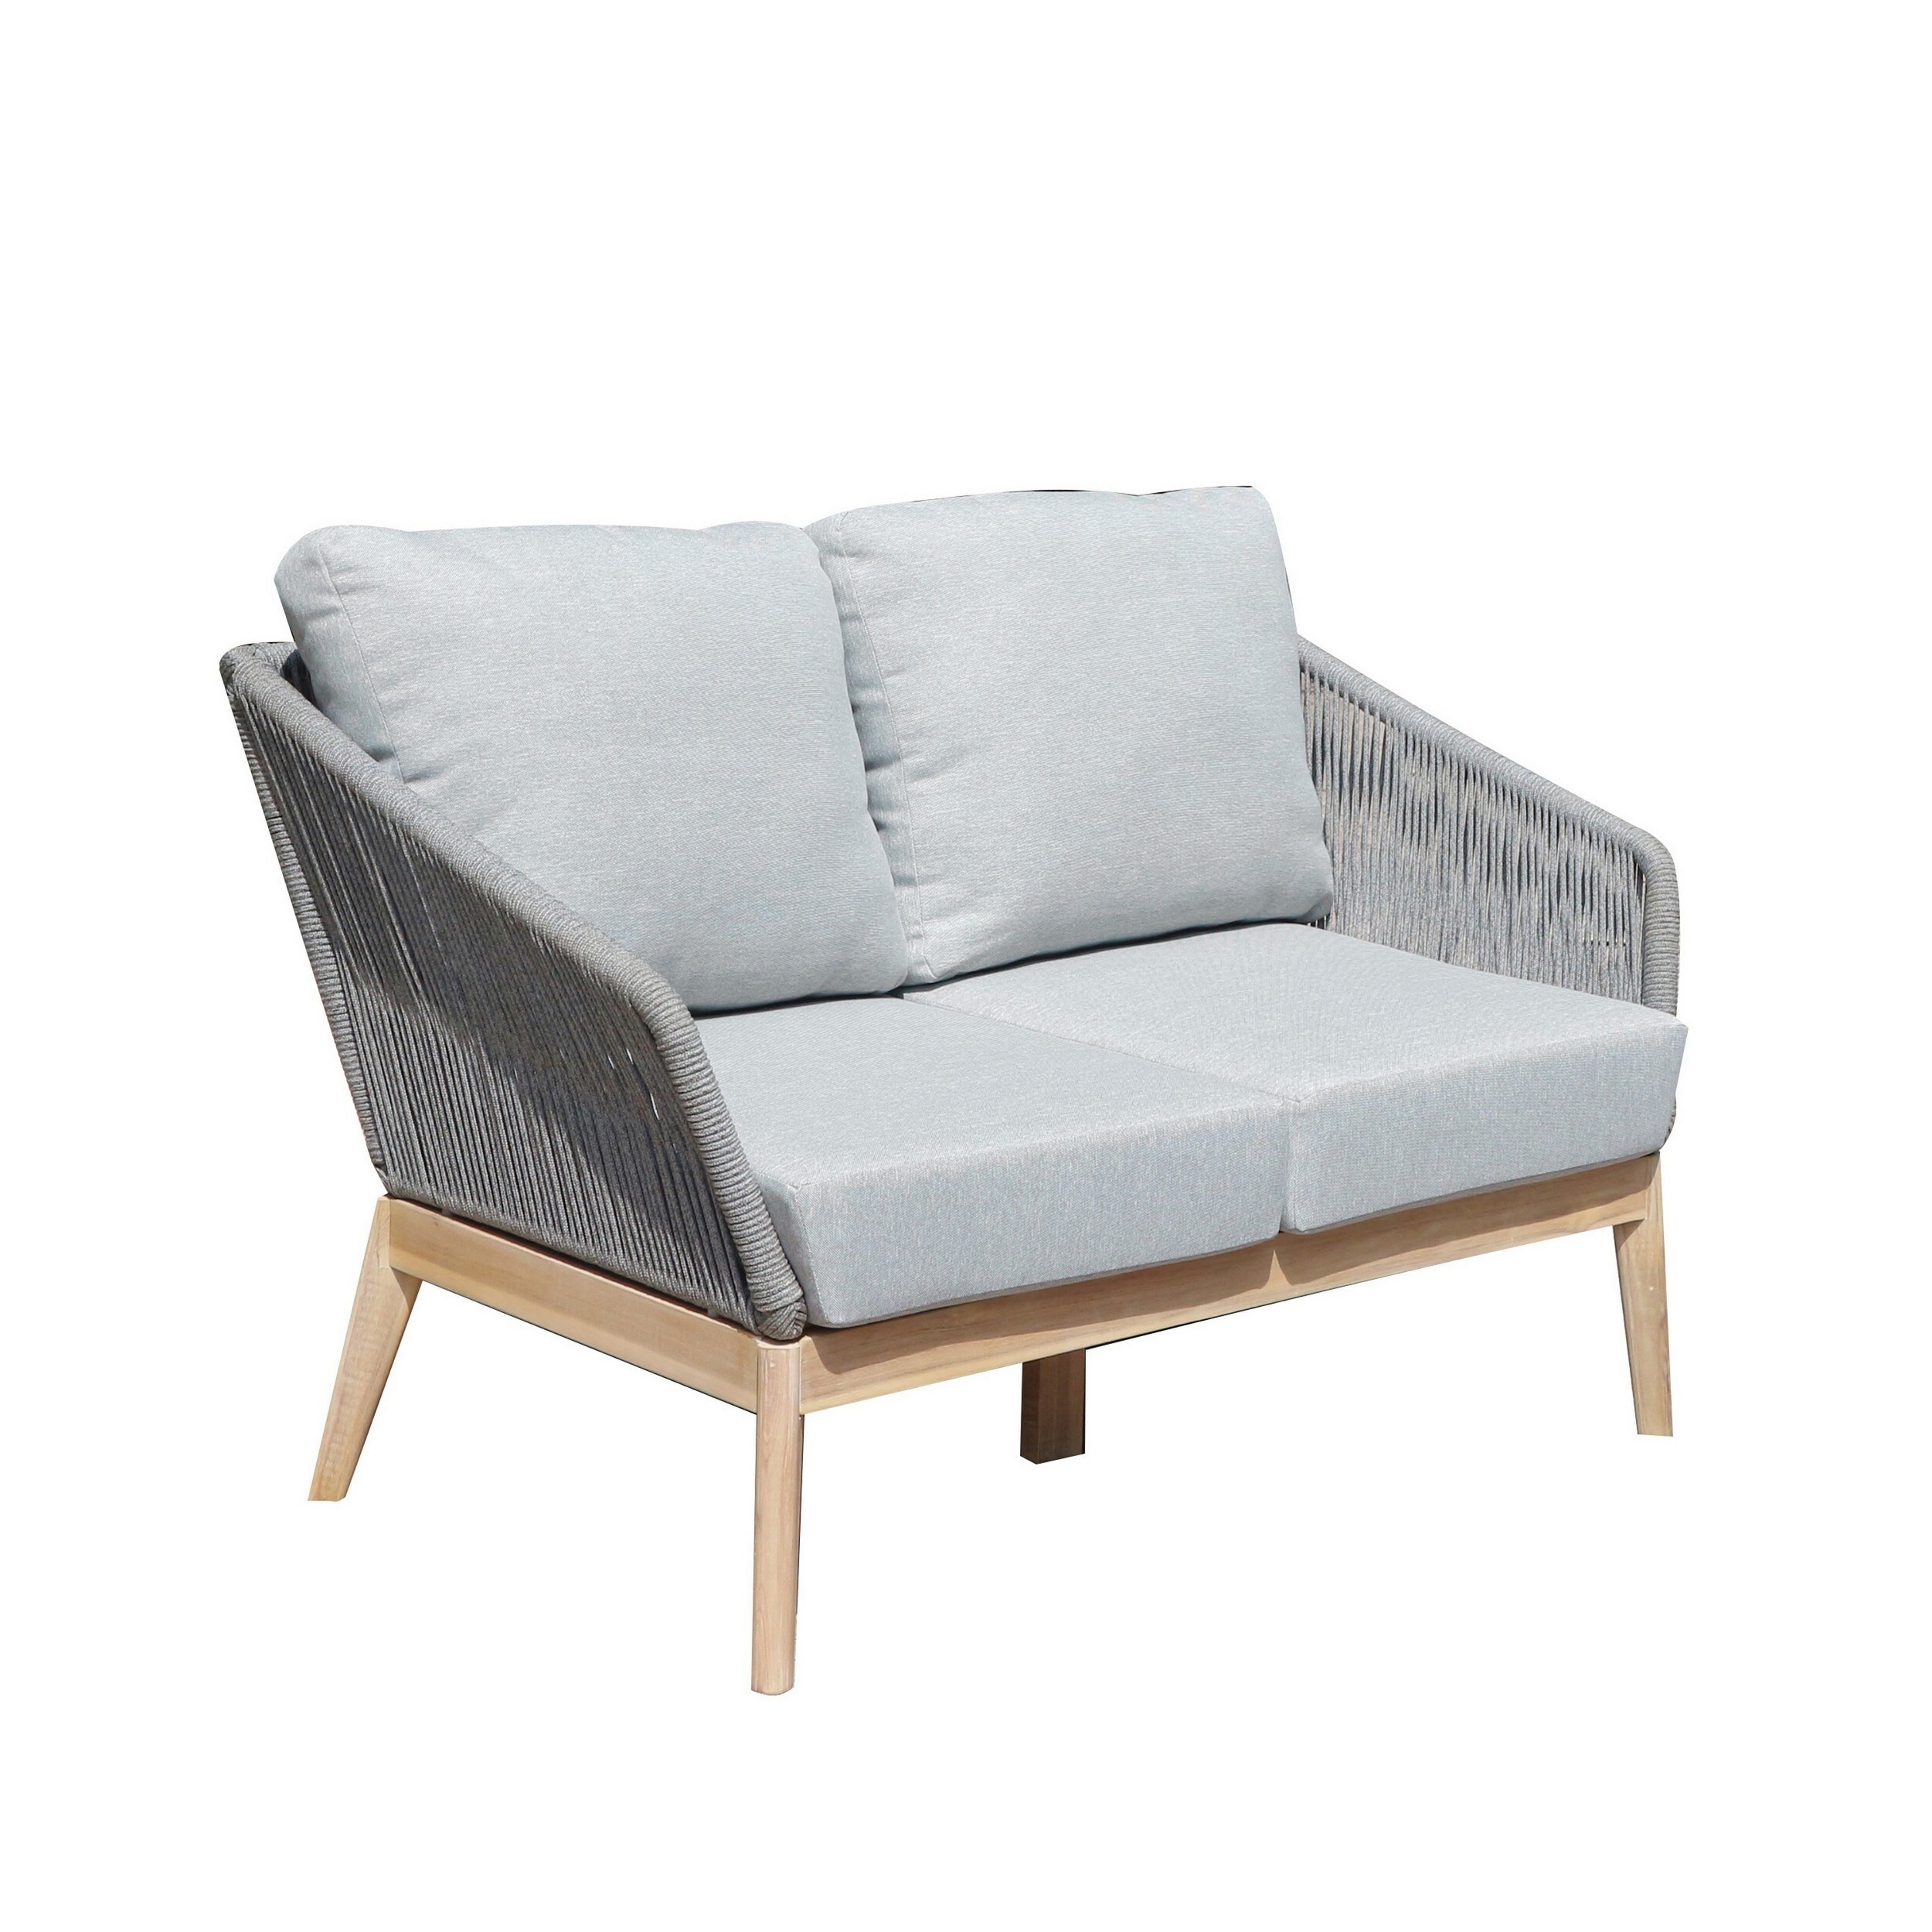 Dexi 51 Inch Patio Sofa  Fade Resistant Fabric Cushions  Gray Acacia Wood